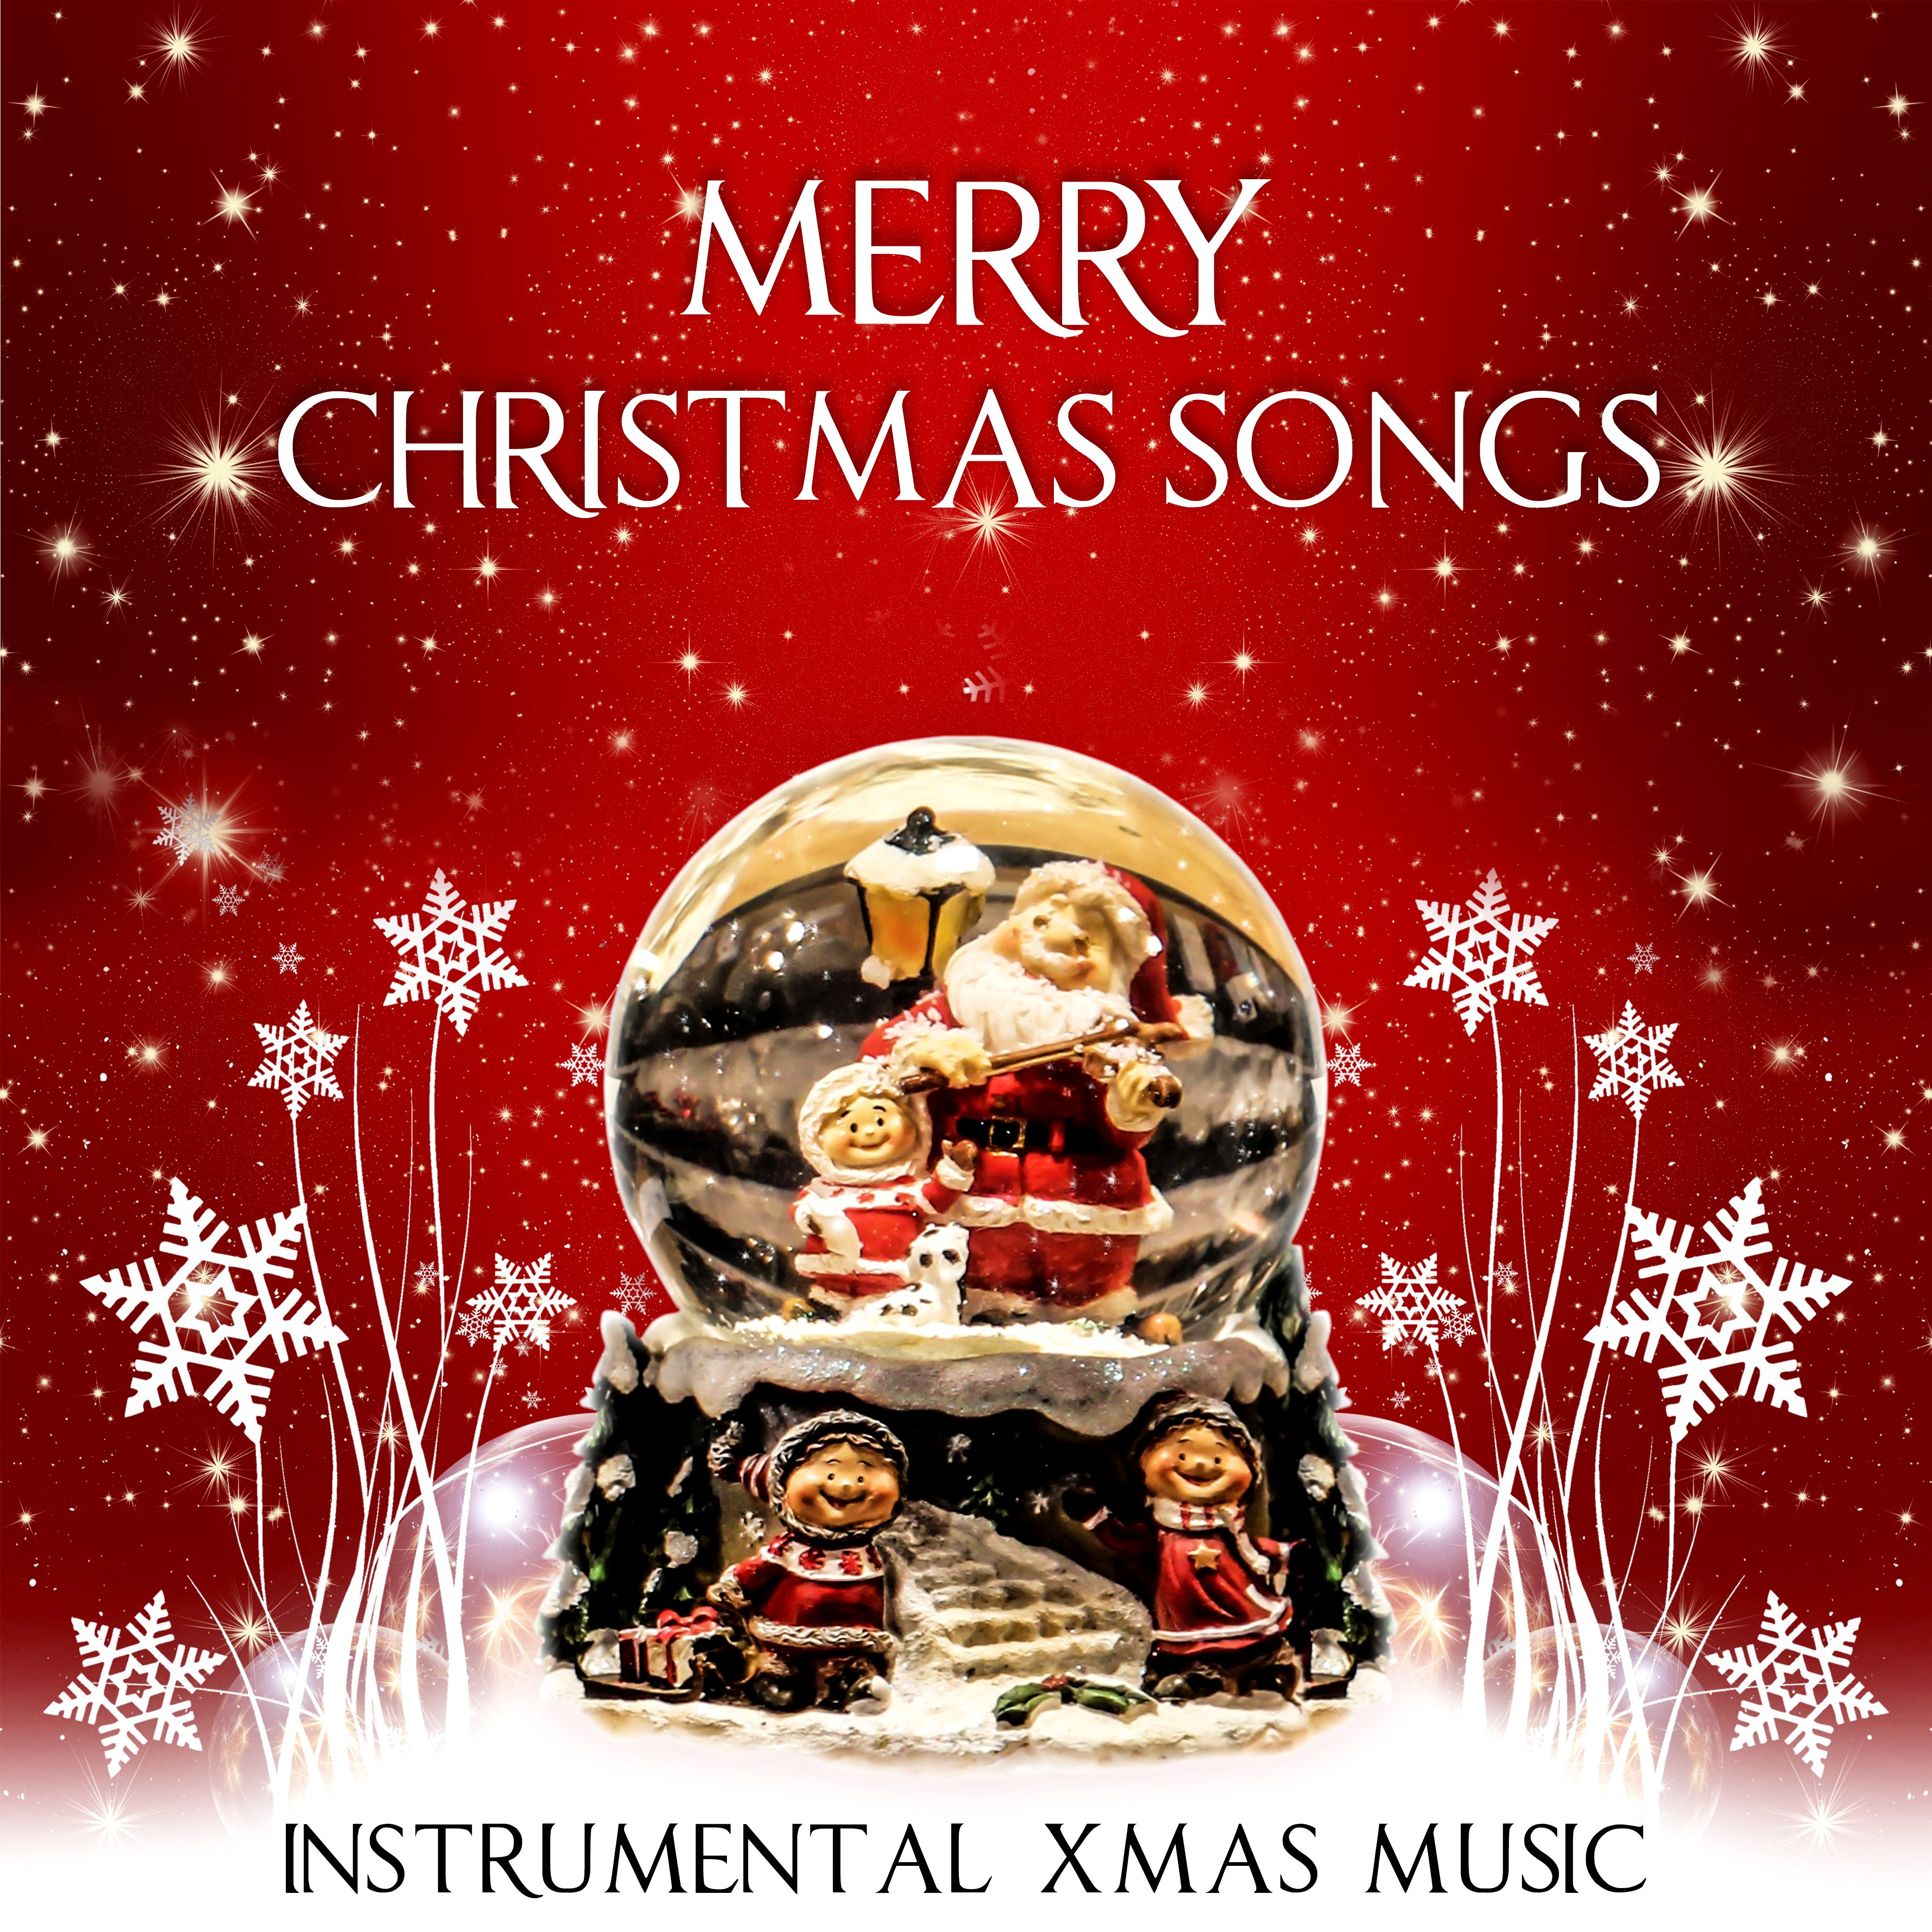 Merry Christmas Songs – Traditional Christmas Carols, Instrumental Xmas Music